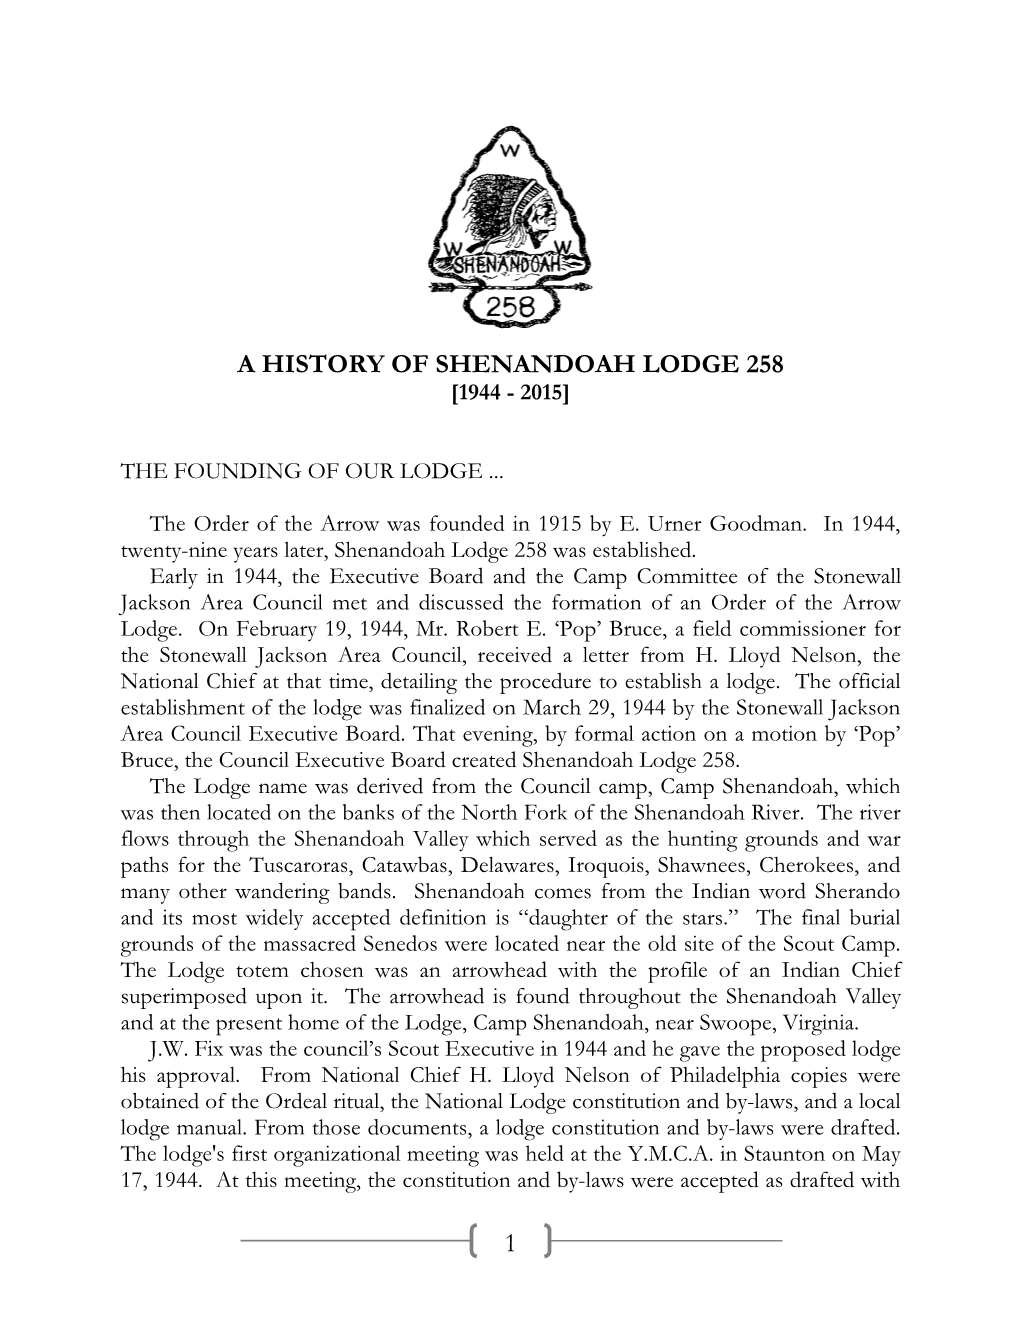 1 a History of Shenandoah Lodge